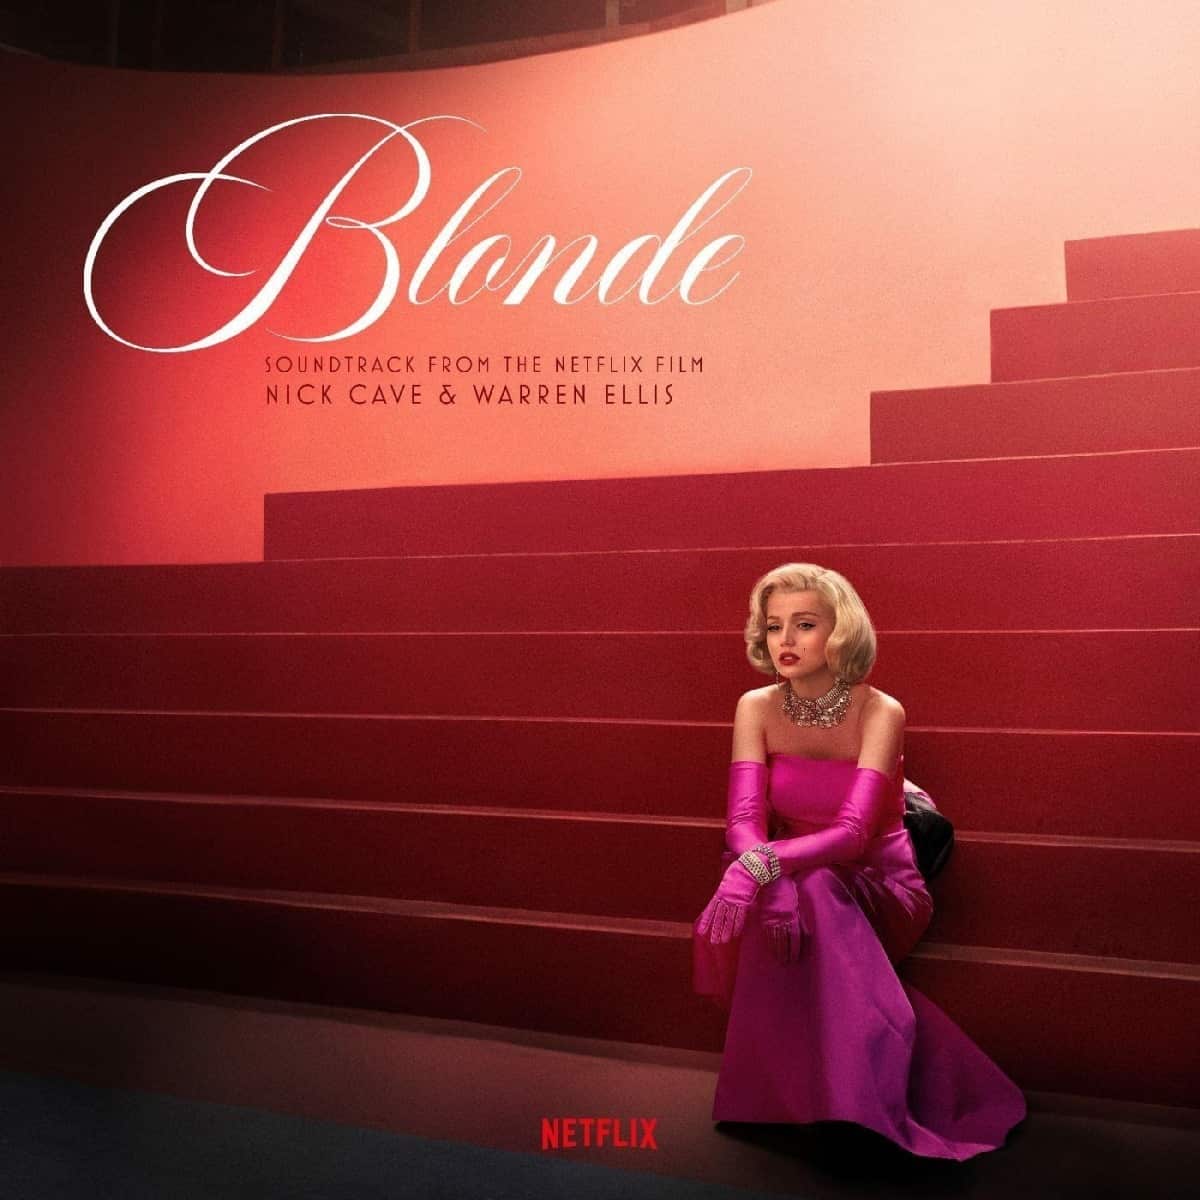 Blonde (Soundtrack From The Netflix Film) - Nick Cave & Warren Ellis